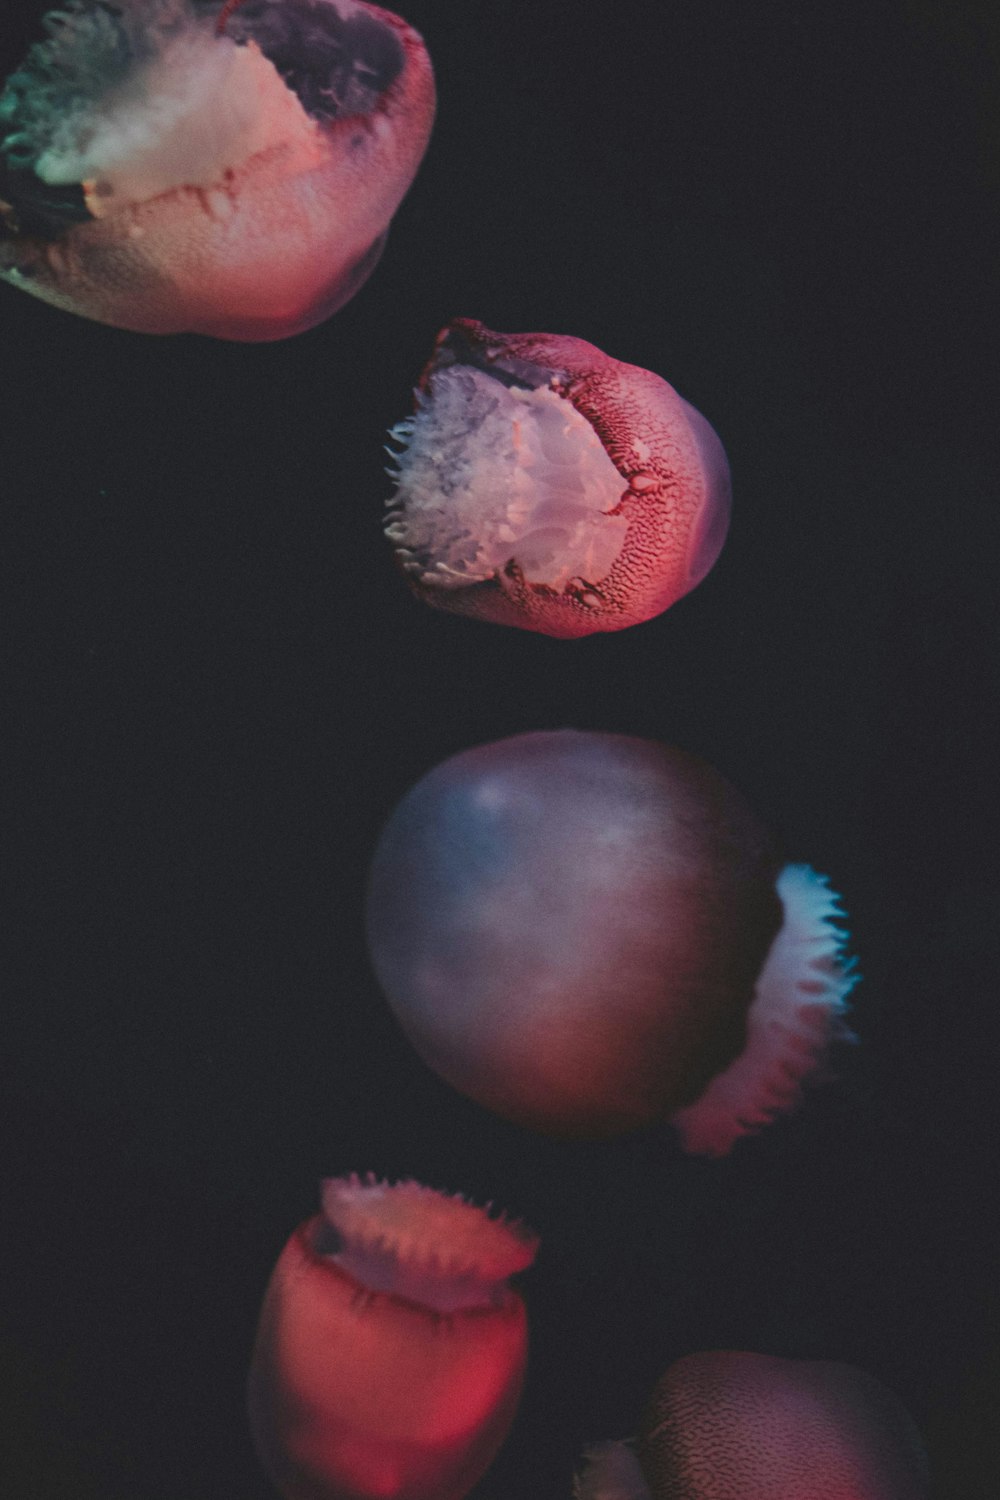 several jellyfish